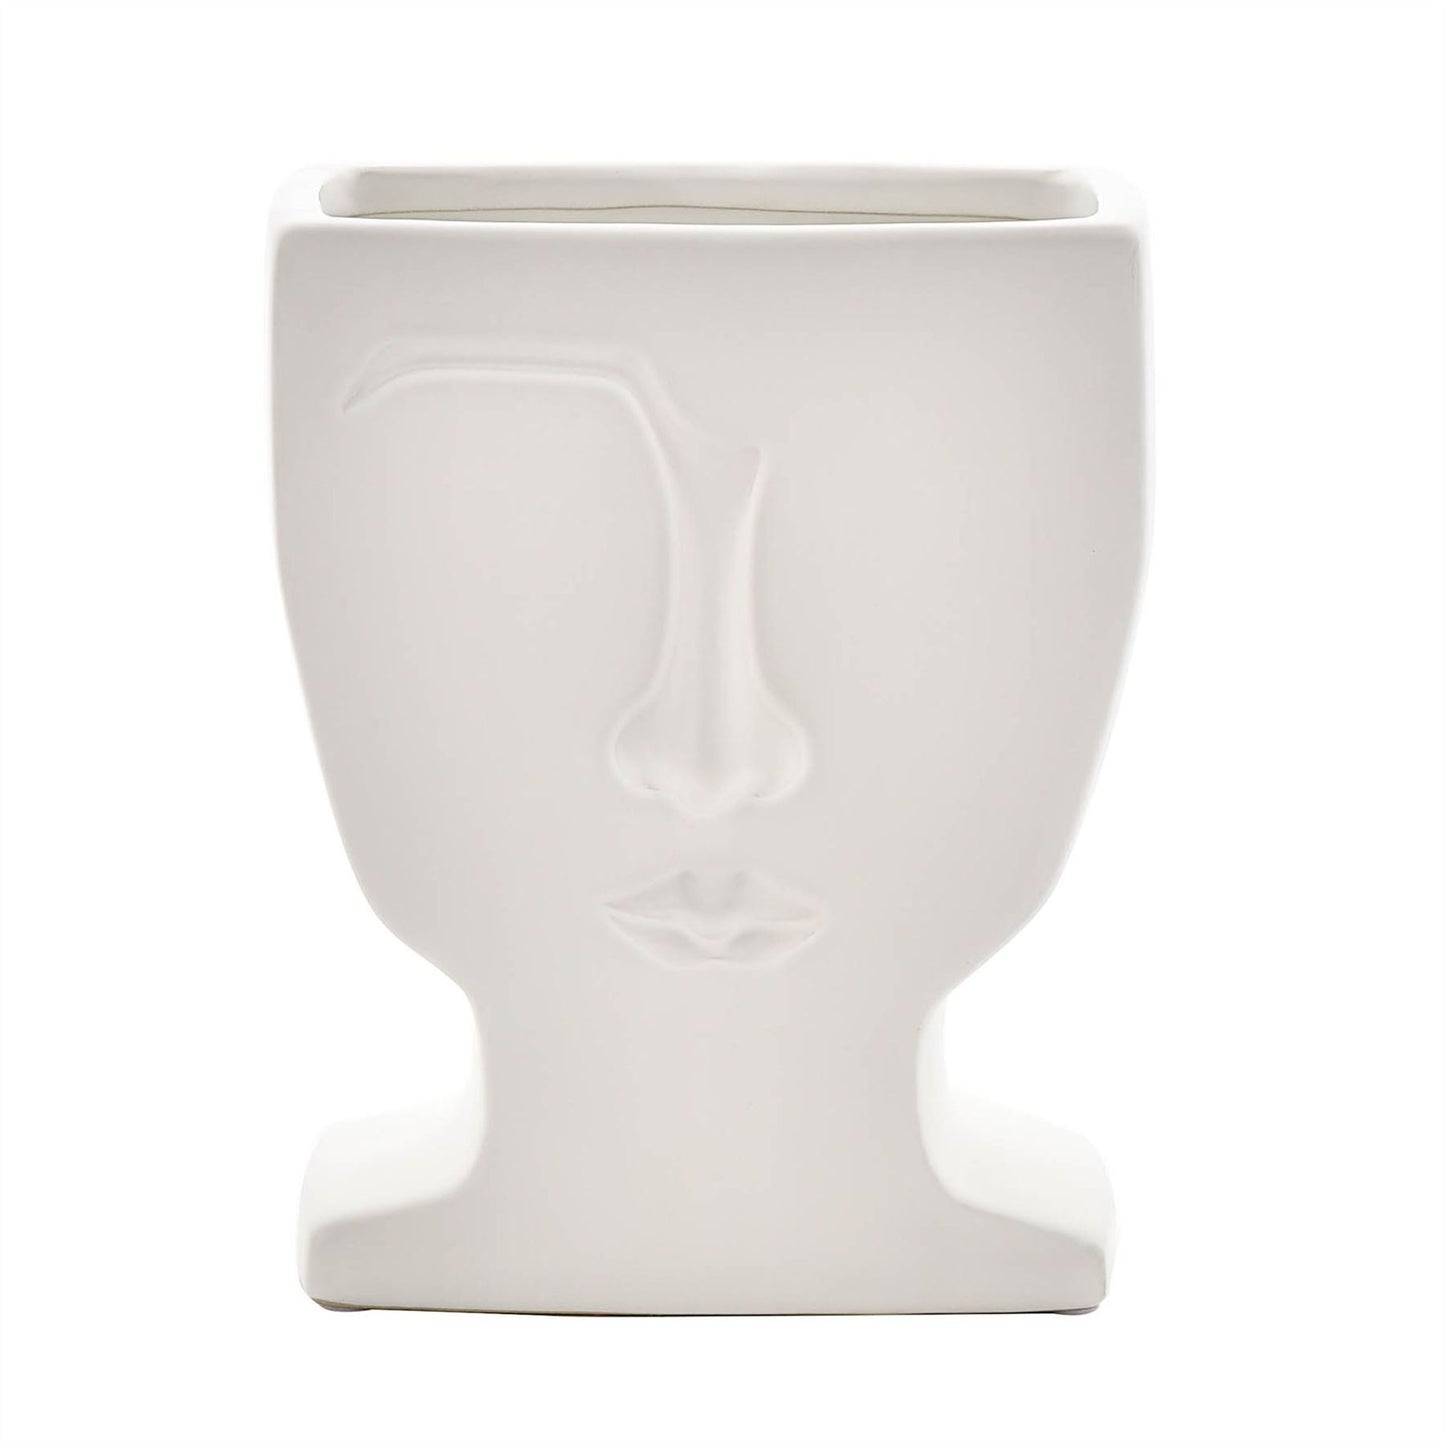 Hestia White Face Vase